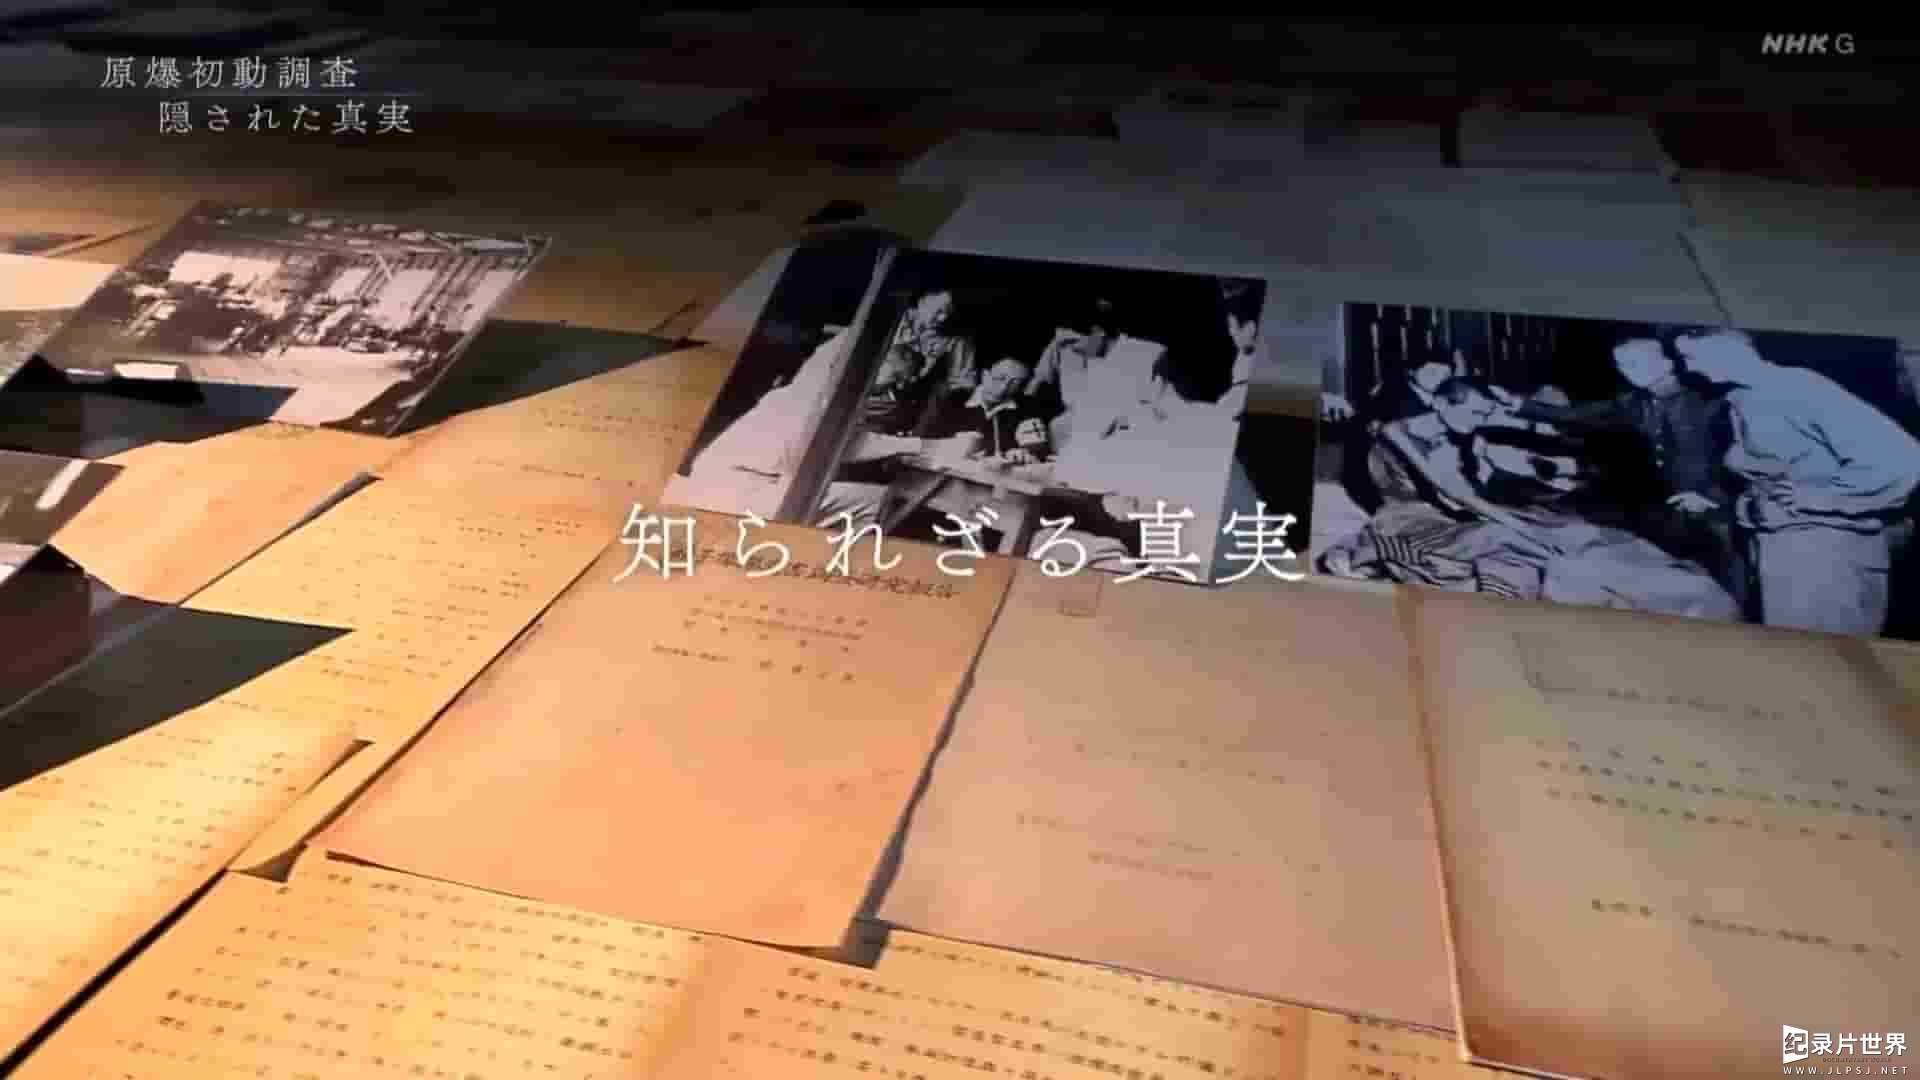 NHK纪录片《原爆初期调查 被隐藏的真相 原爆初動調査 隠された真実 2021》全1集